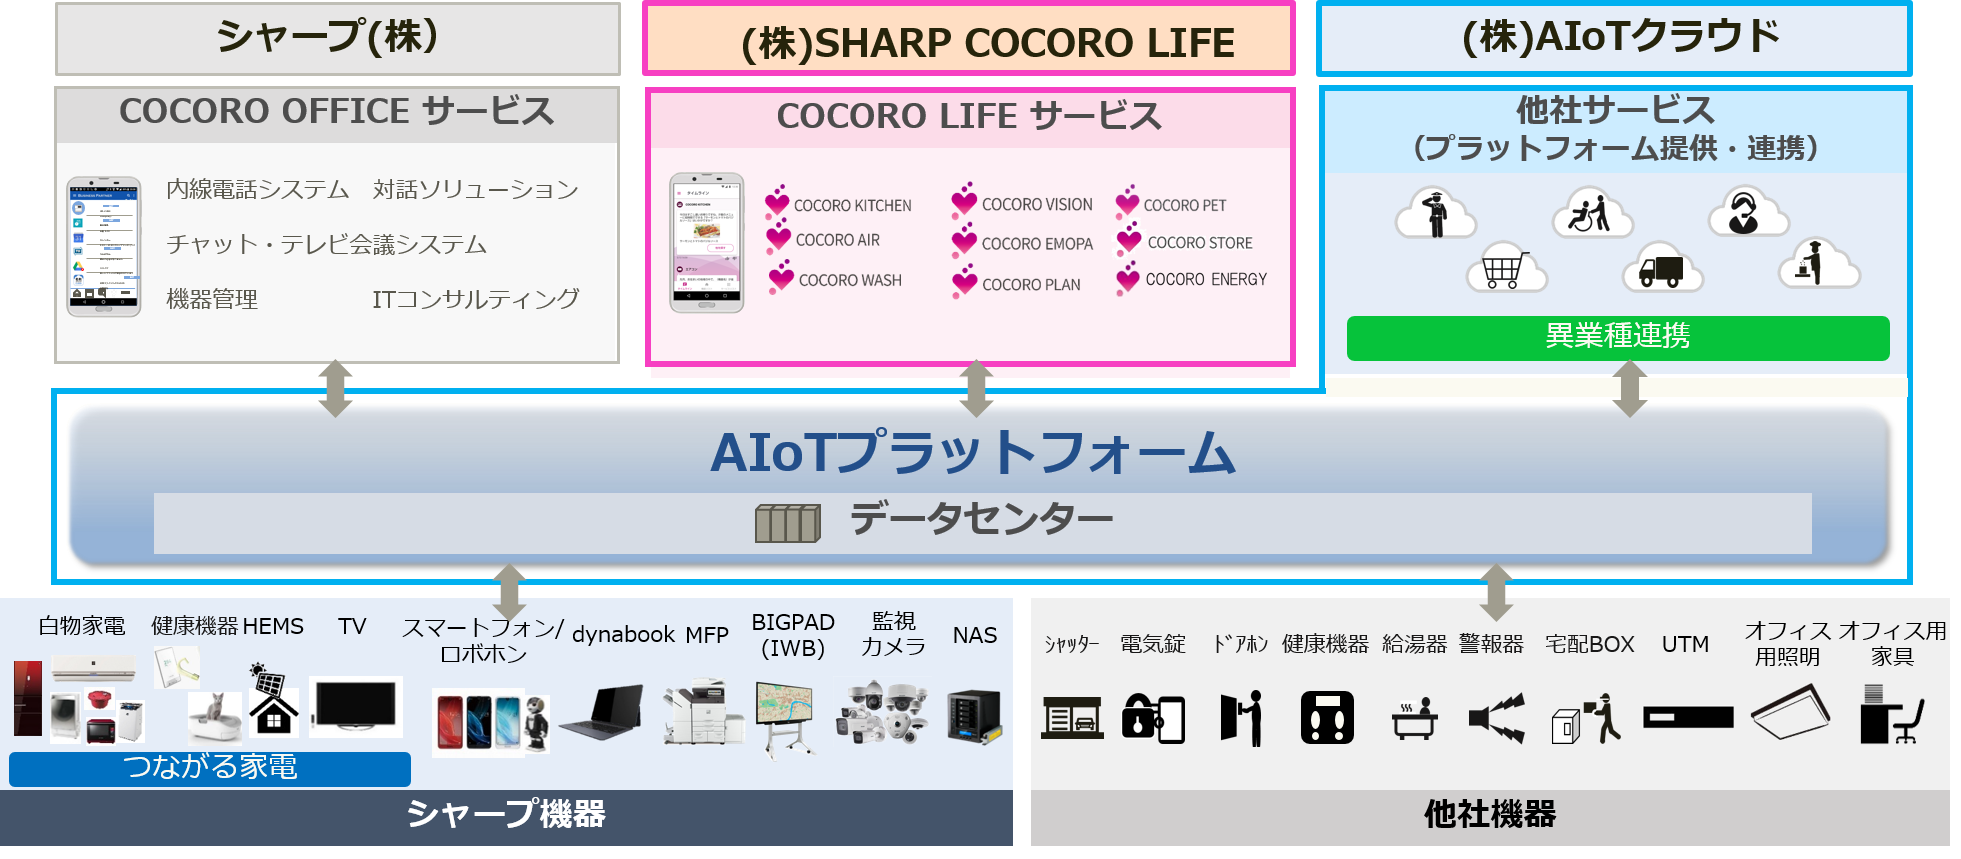 Sharp Cocoro Life Sharp Corporation To Carve Amp Petmd Com